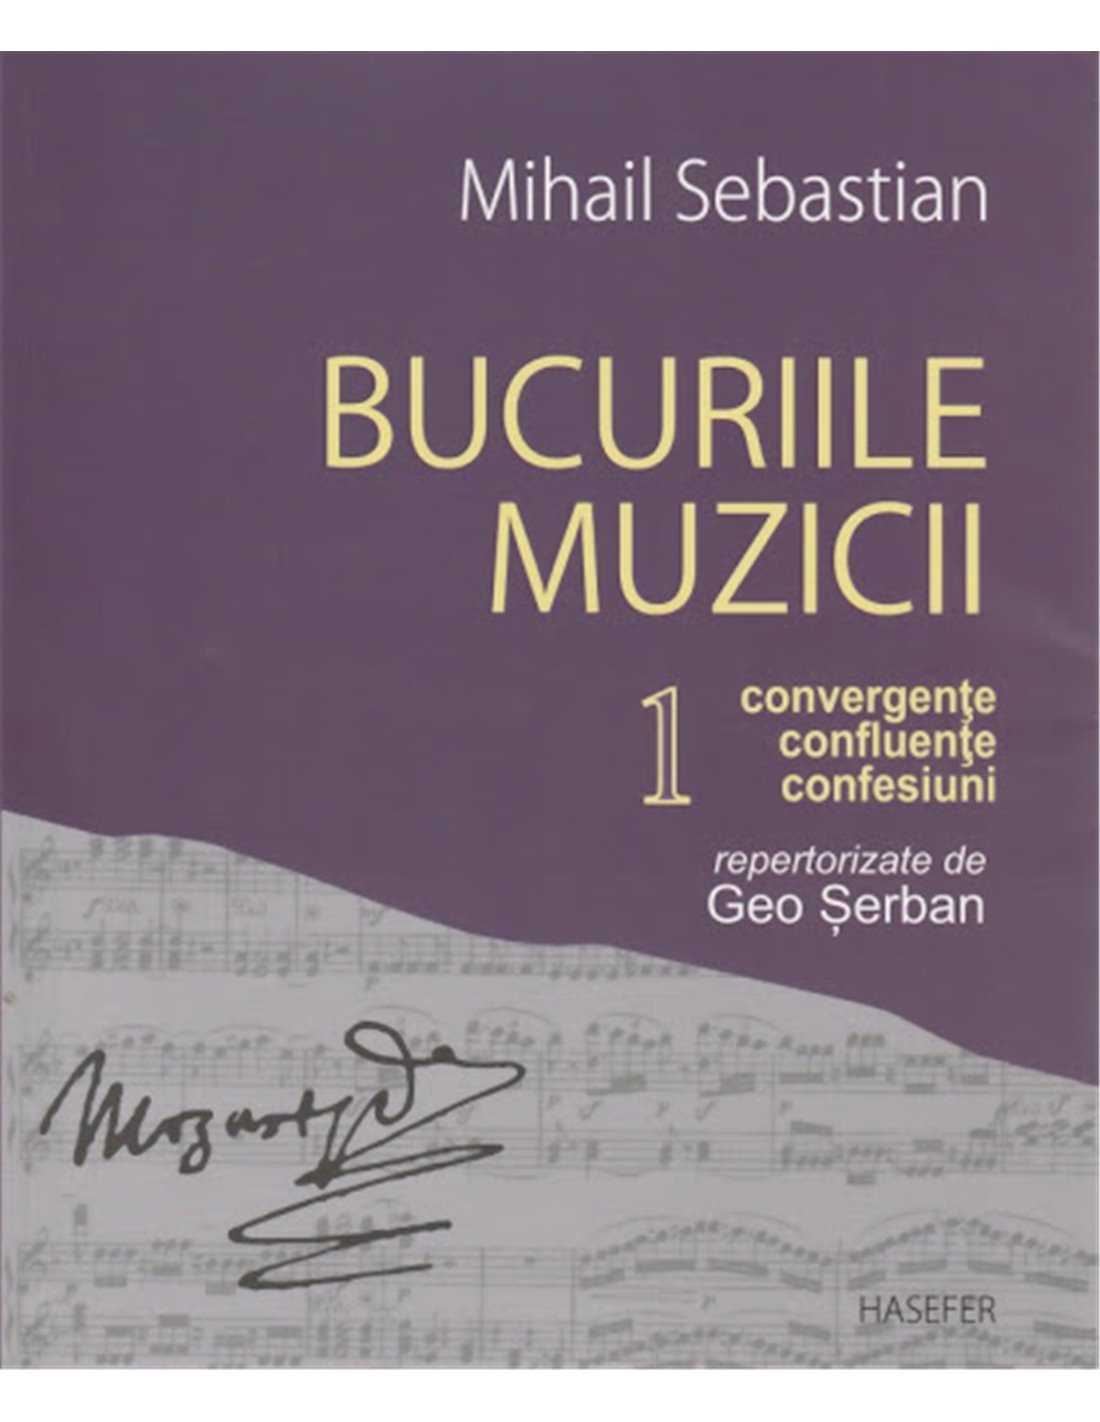 Bucuriile muzicii - Vol 1 - Mihail Sebastian | Editura Hasefer